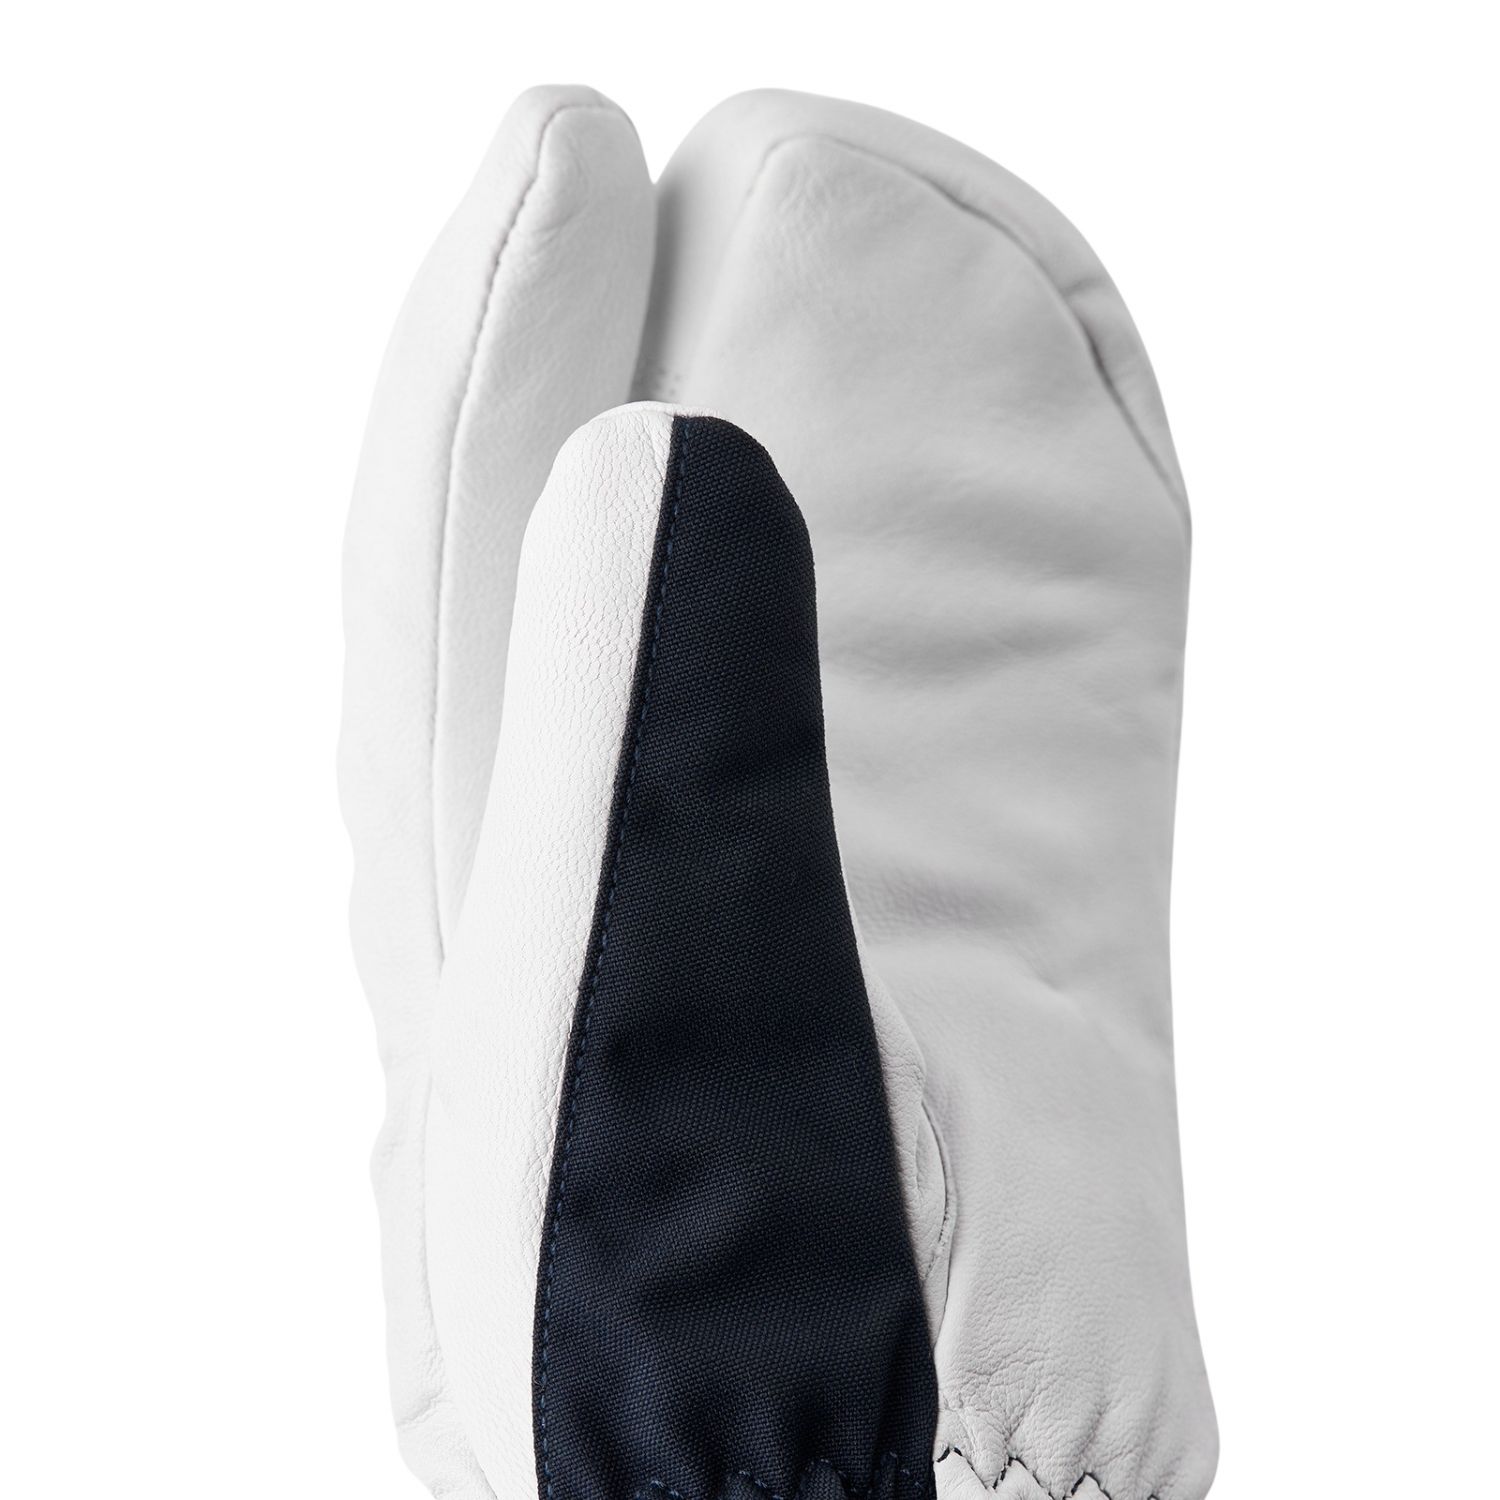 Hestra Heli Ski, 3-finger ski gloves, women, navy